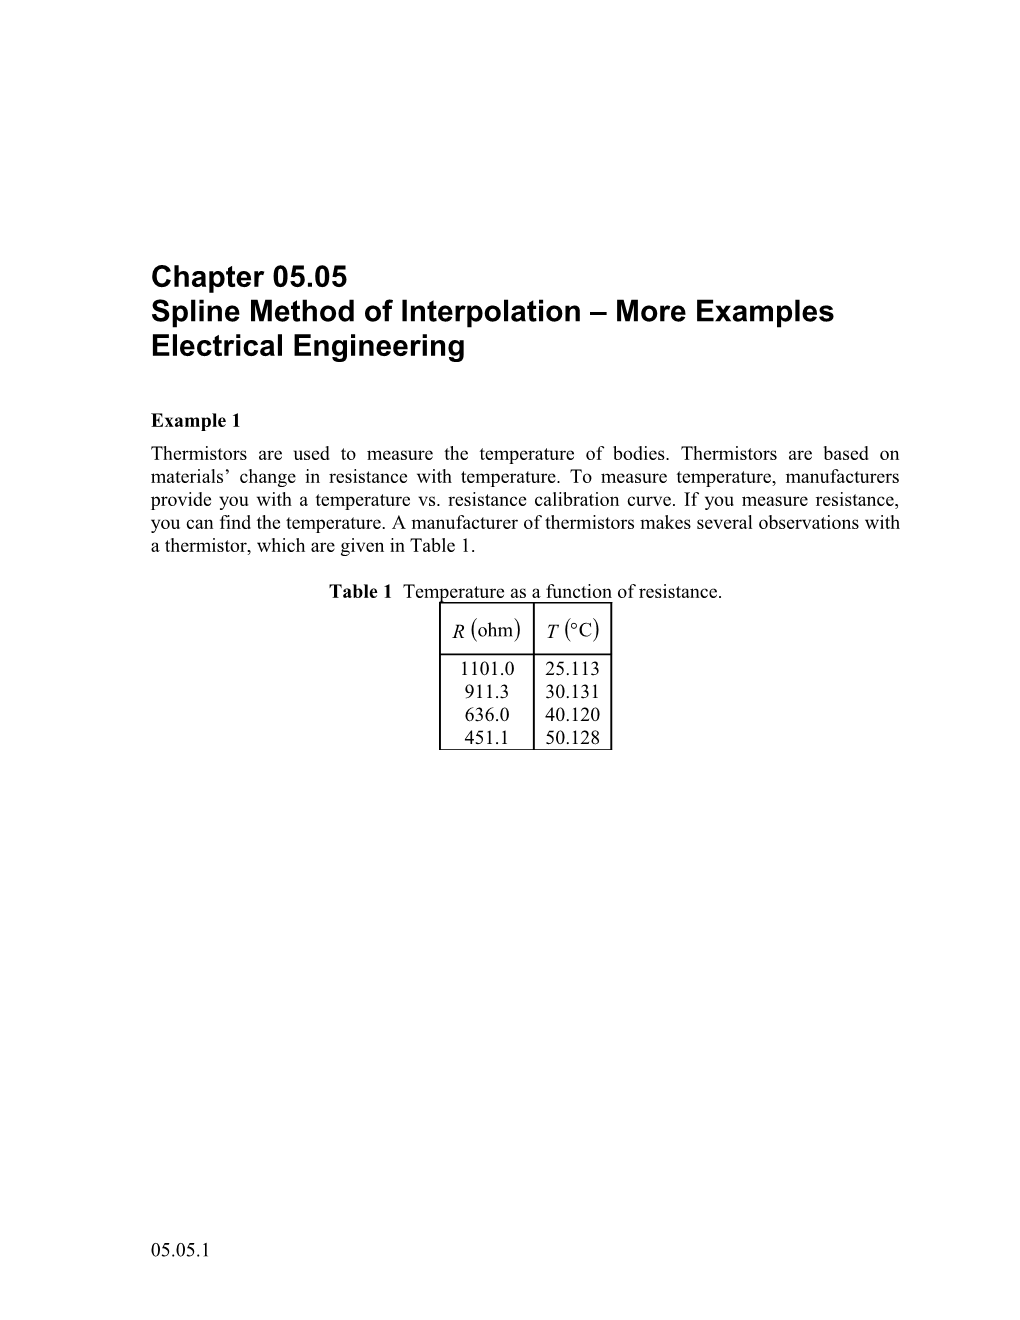 Spline Method of Interpolation-More Examples: Electrical Engineering